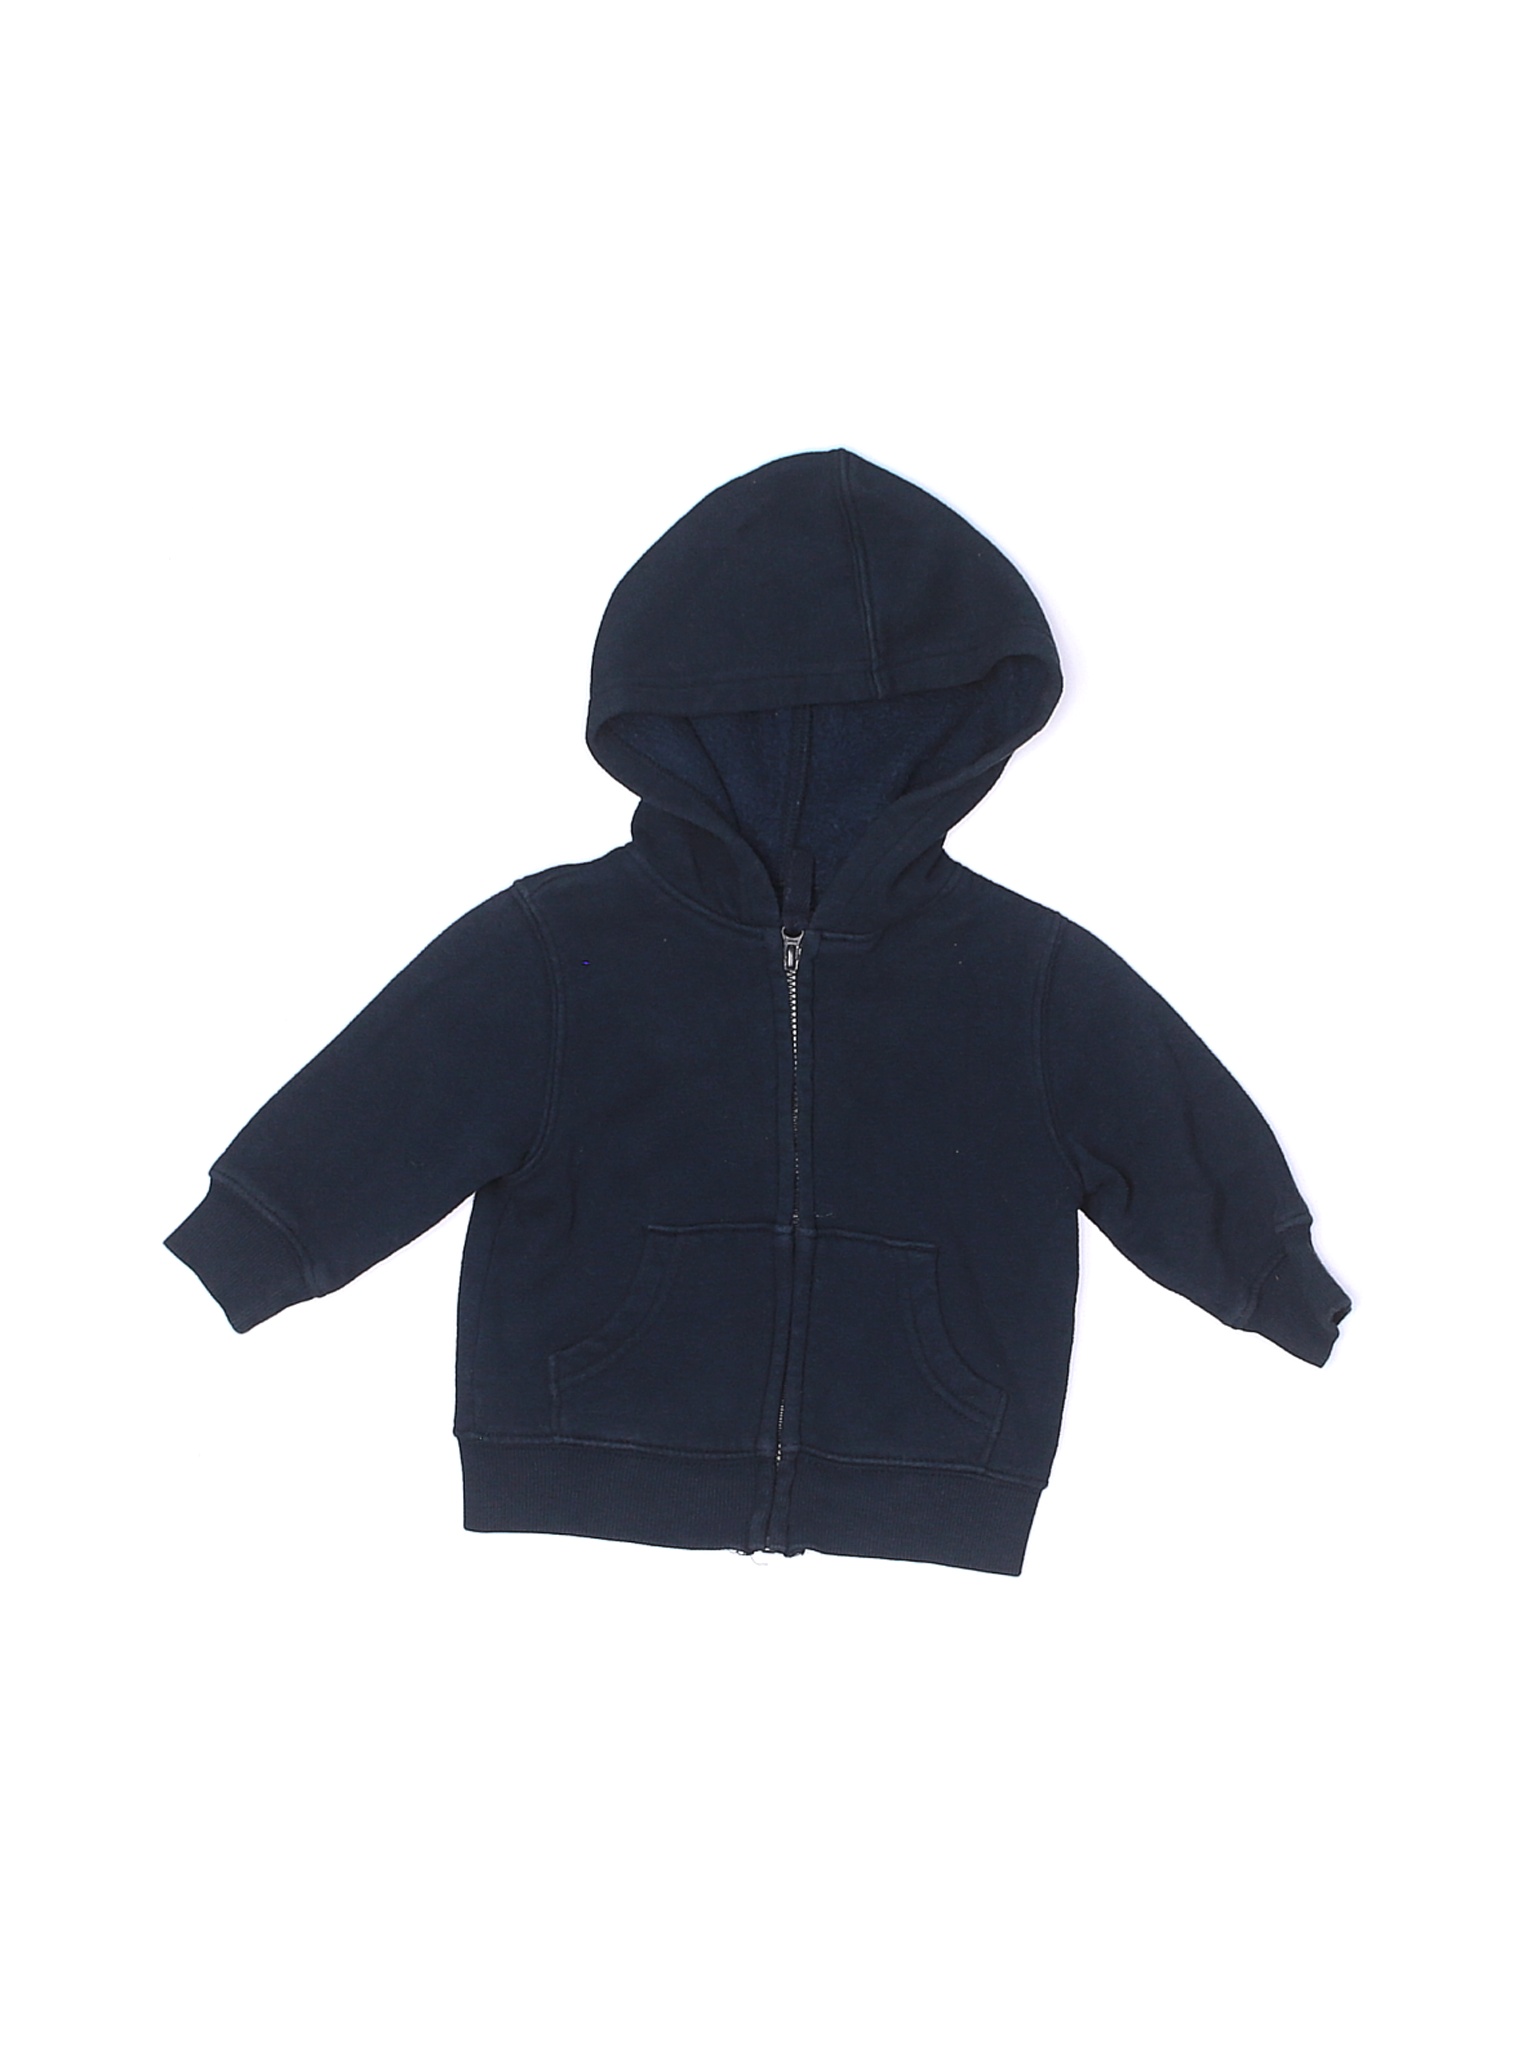 Jumping Beans Boy's L/S Quarter Zip Fleece Pullover Sweater SH3 Black Size 6 